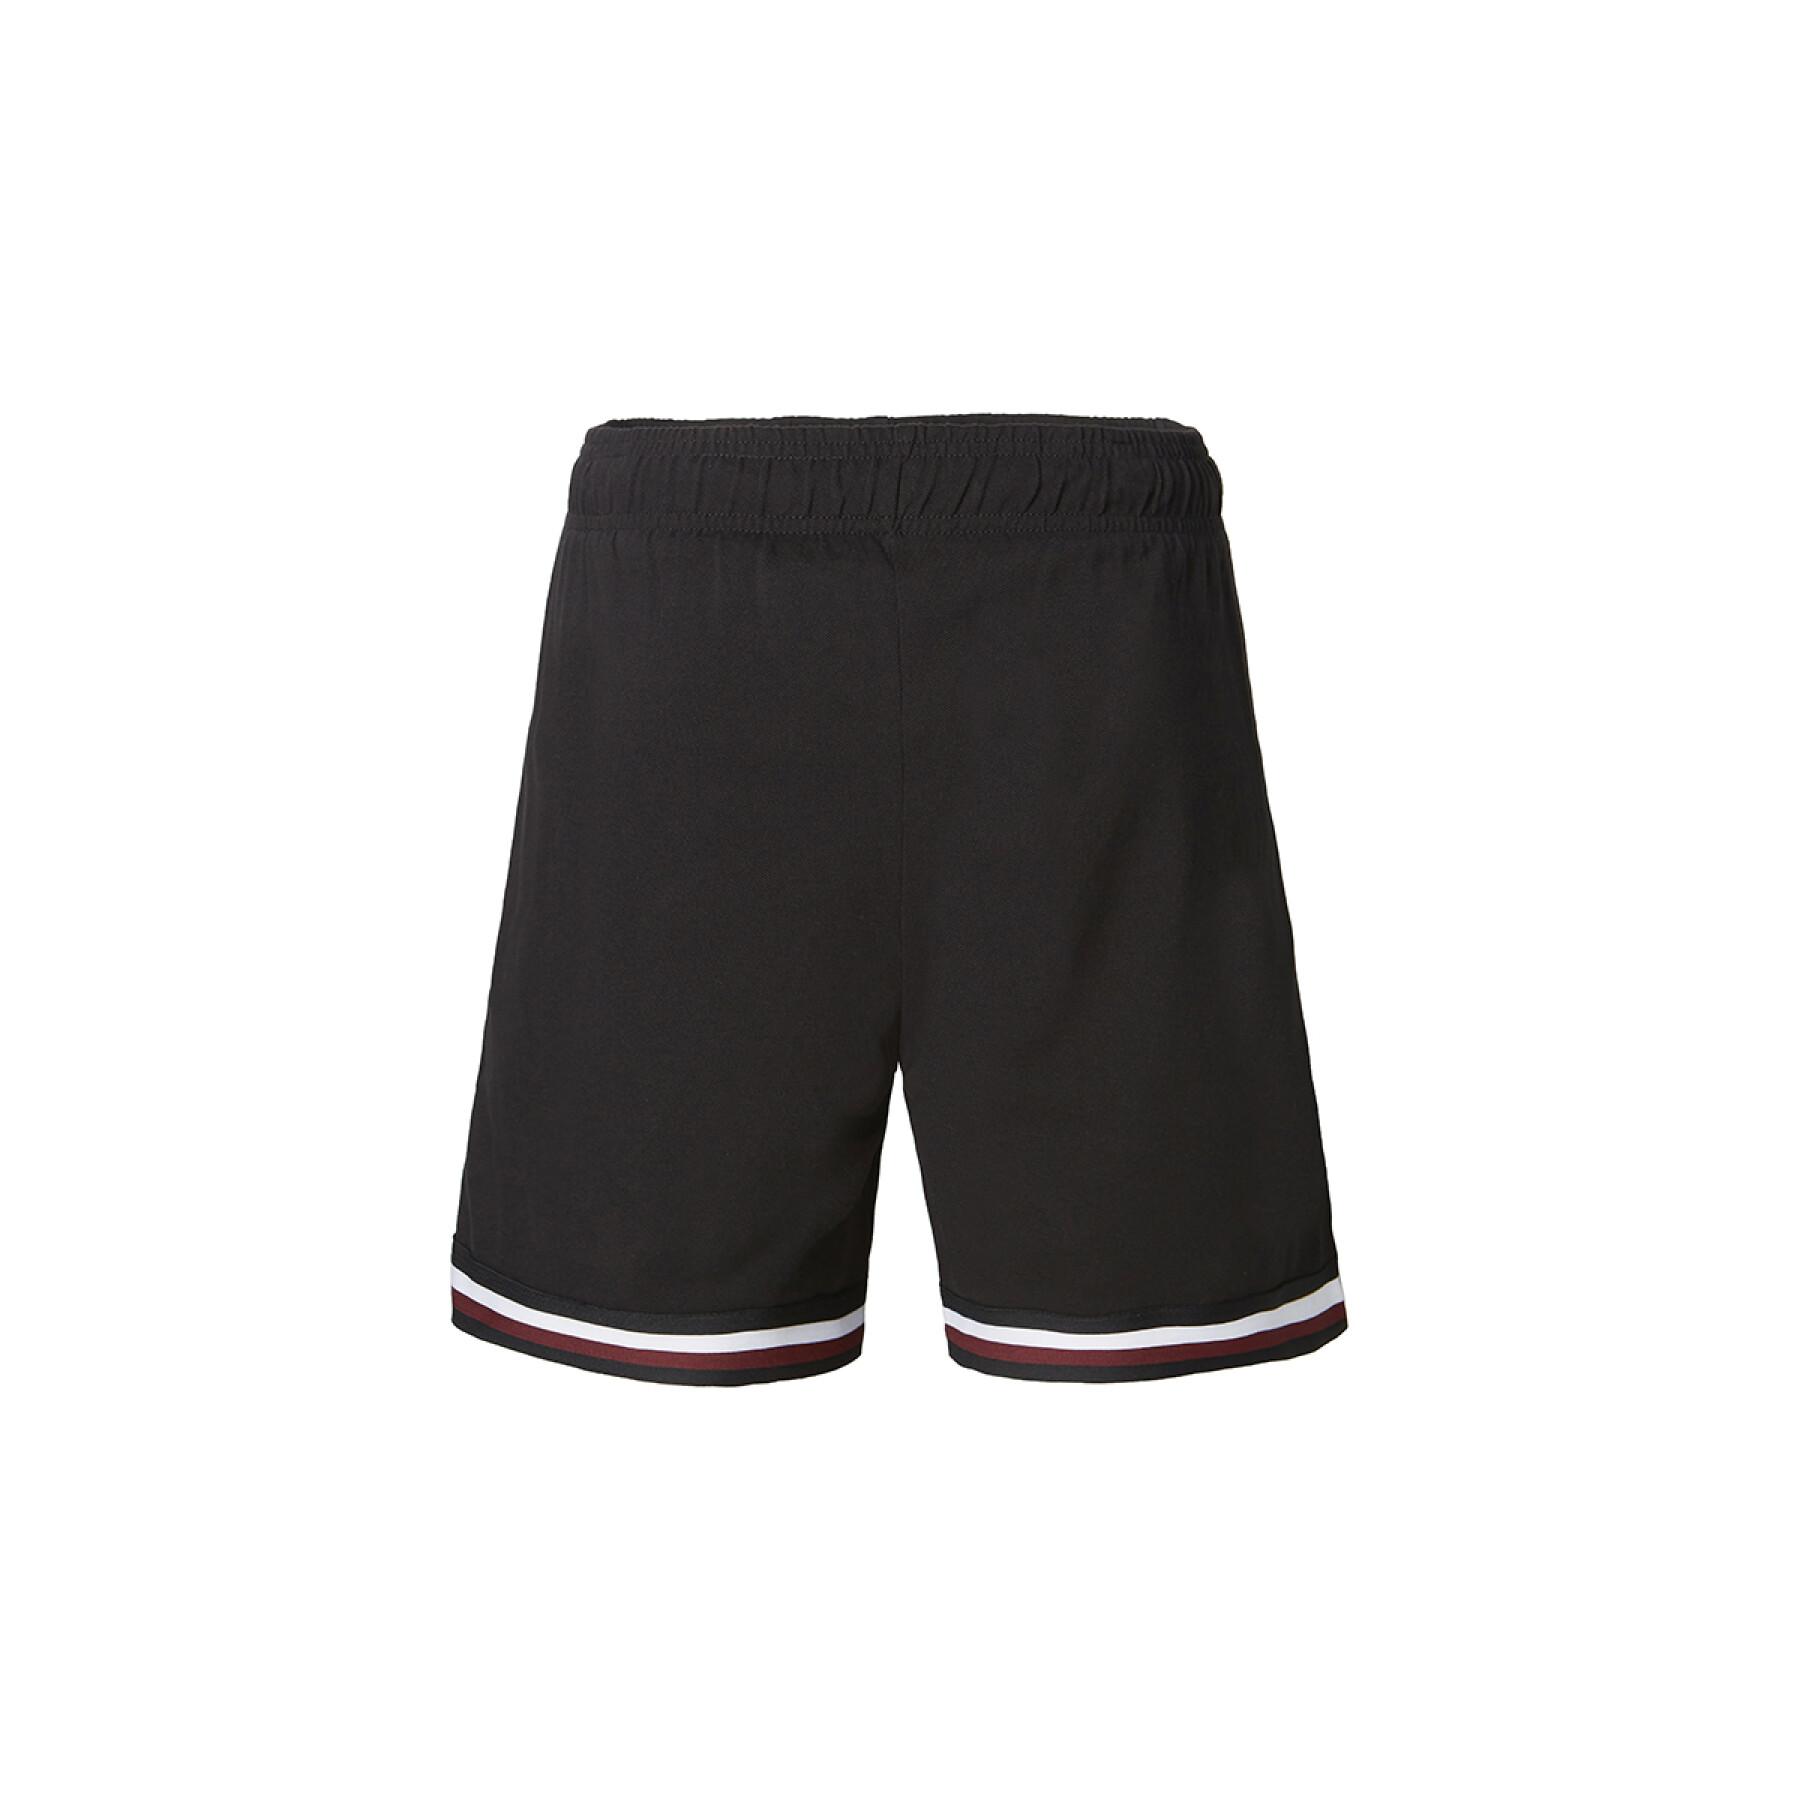 Kinder shorts FC Metz 2021/22 cavatelli